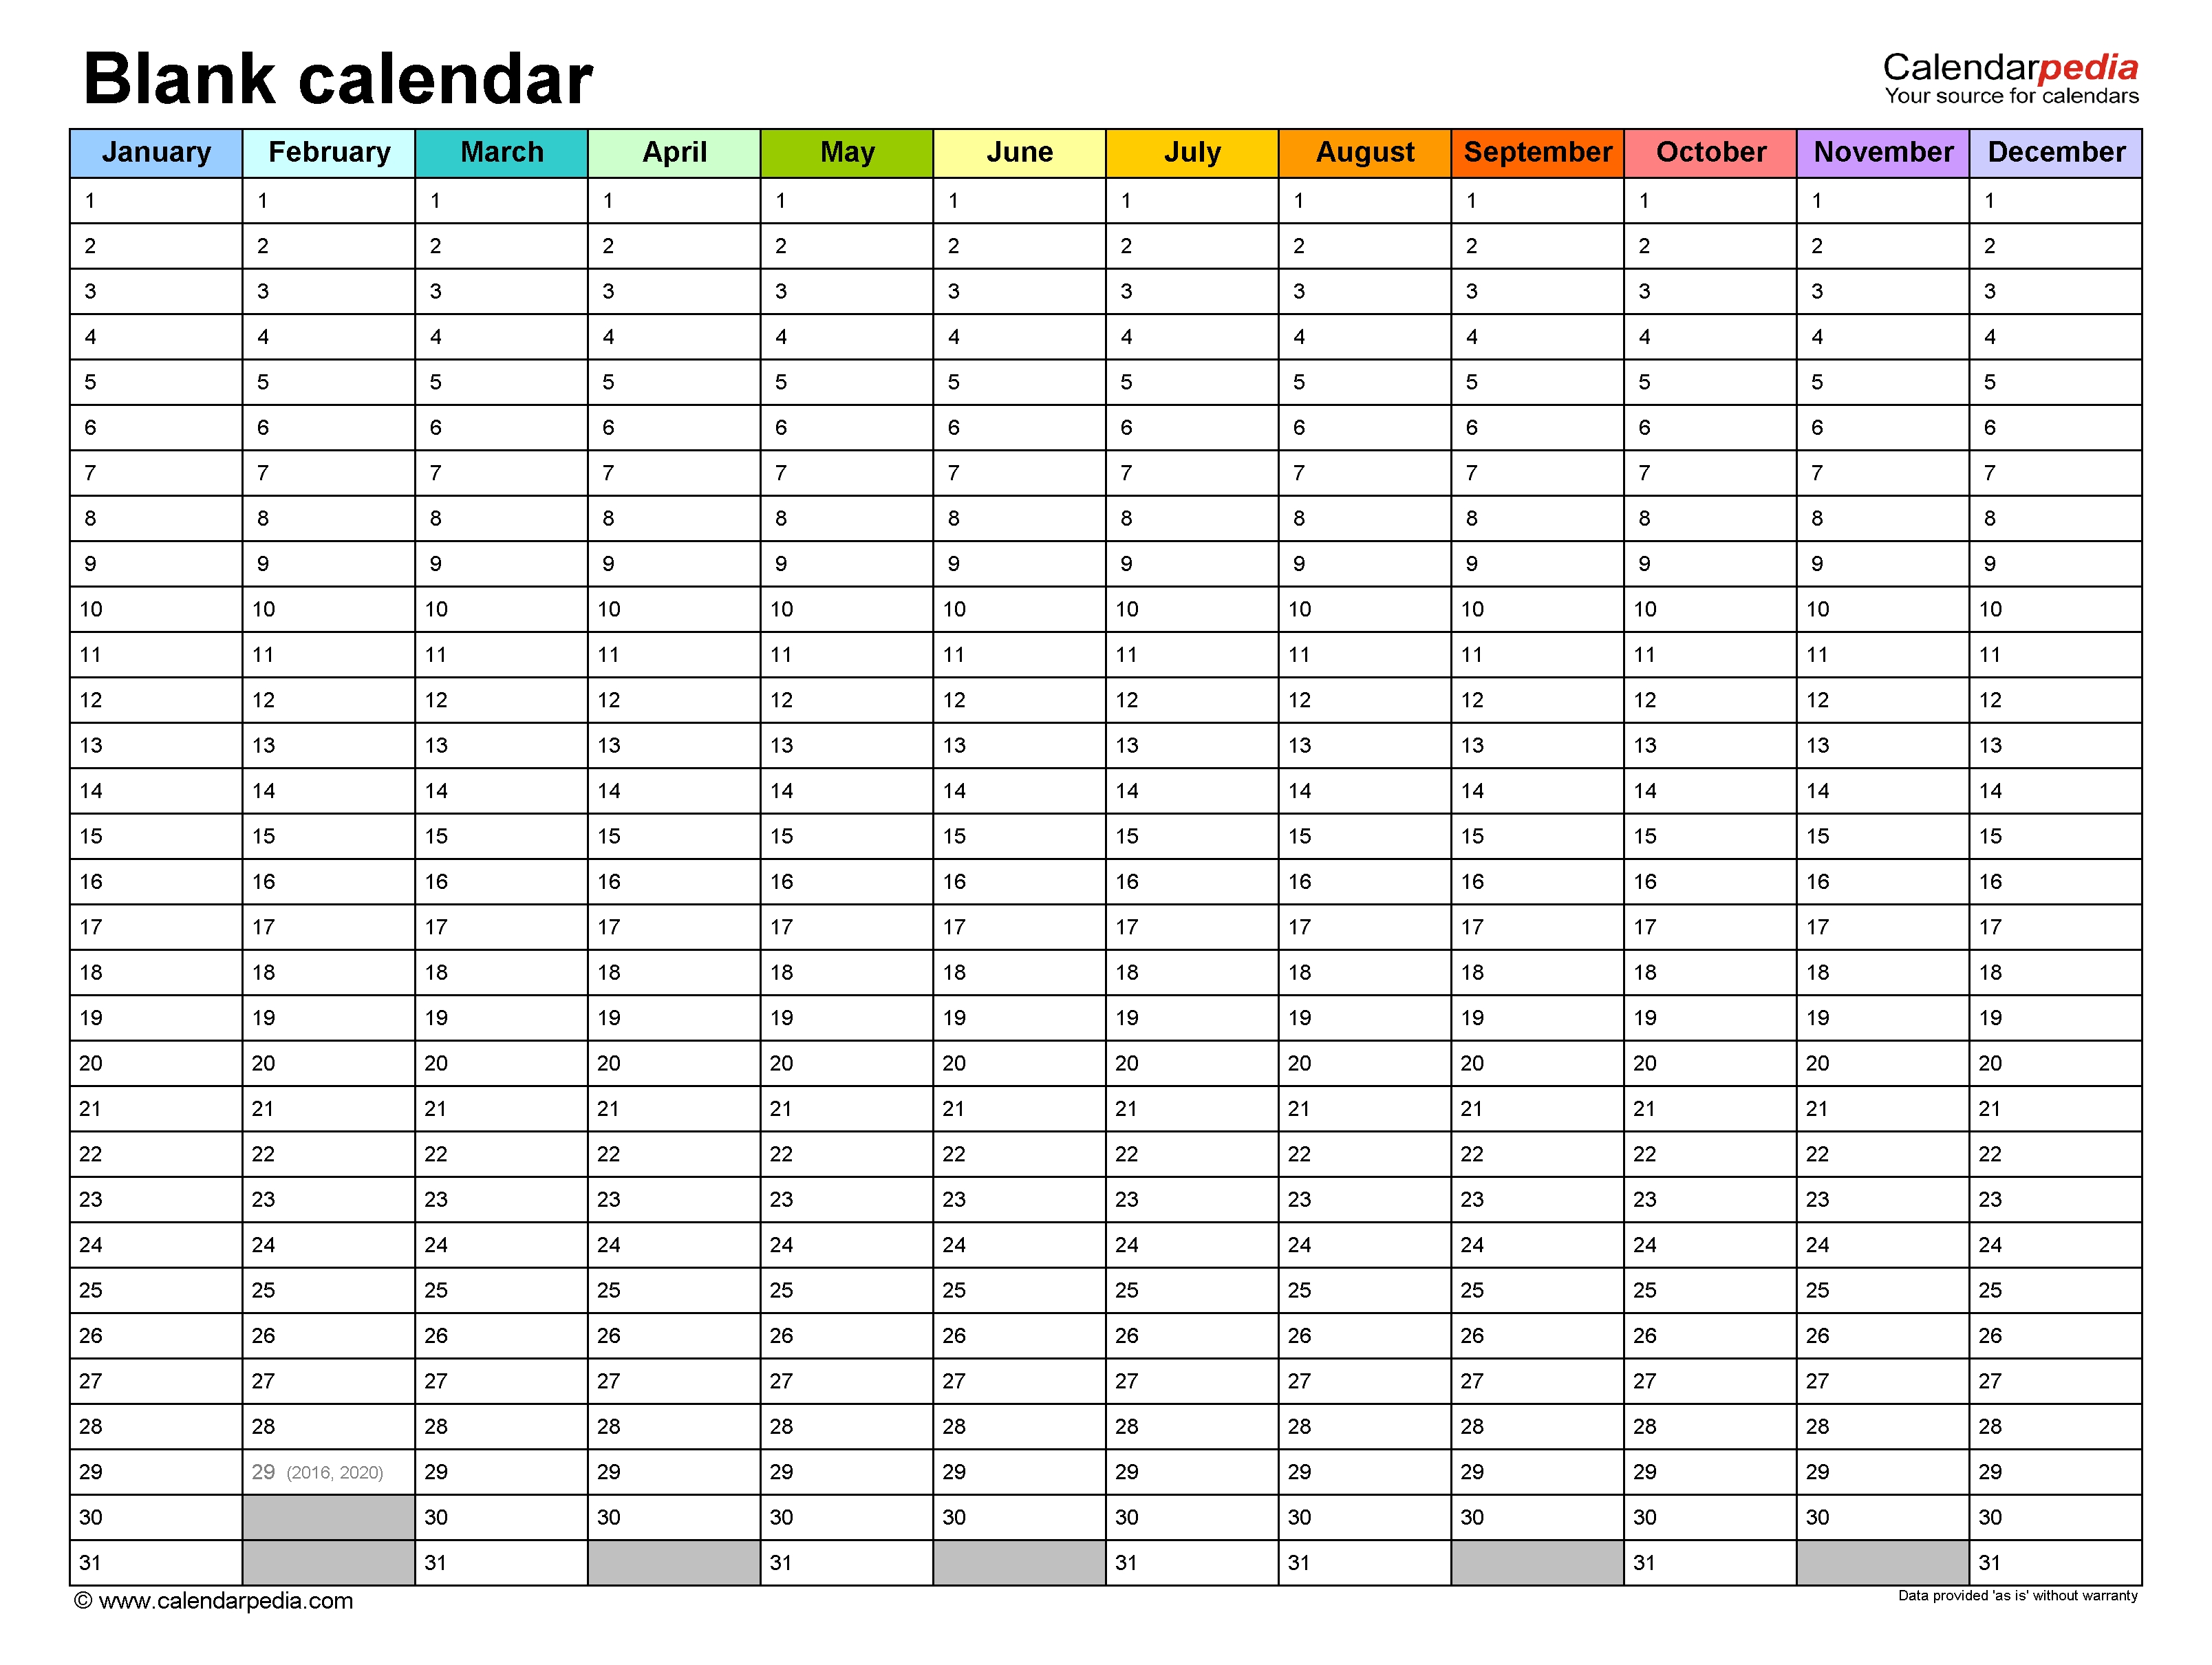 Blank Calendars - Free Printable Microsoft Word Templates Year Calendar Word Template